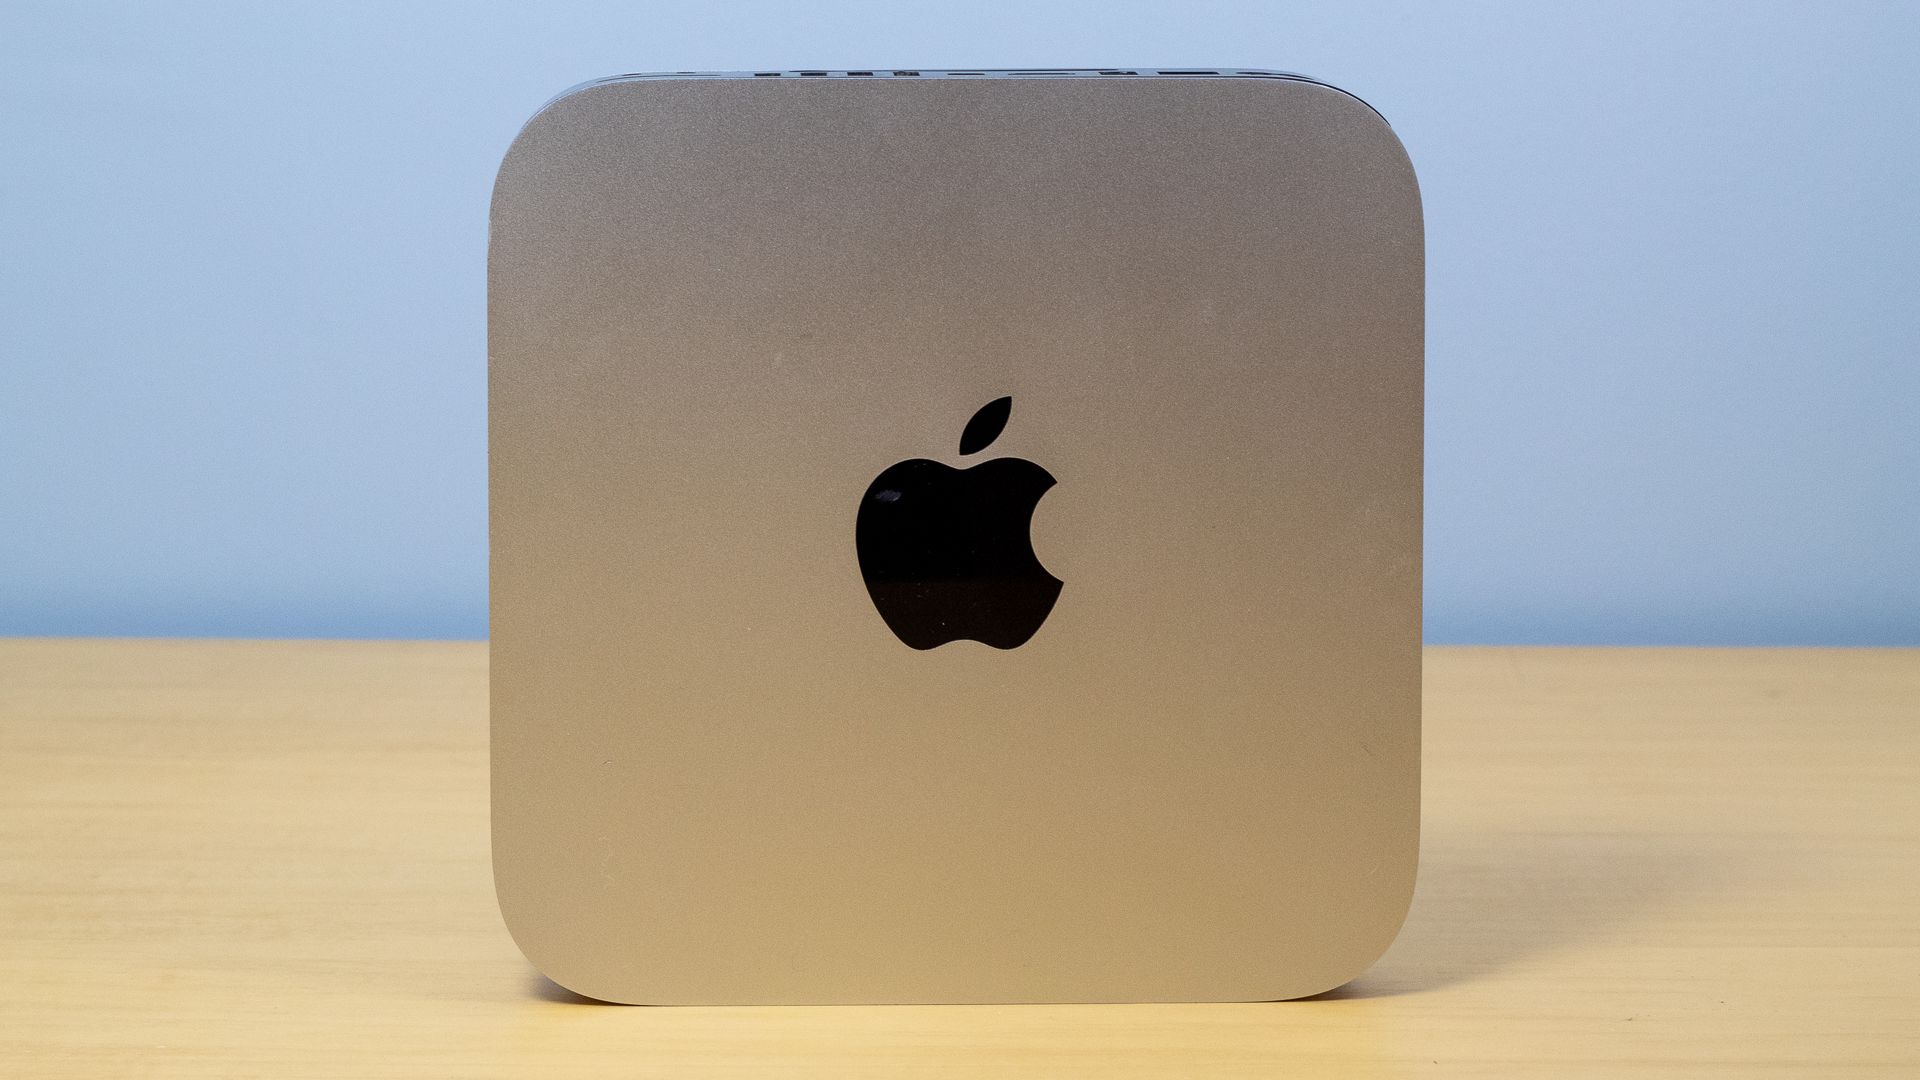 A Mac on a desk.